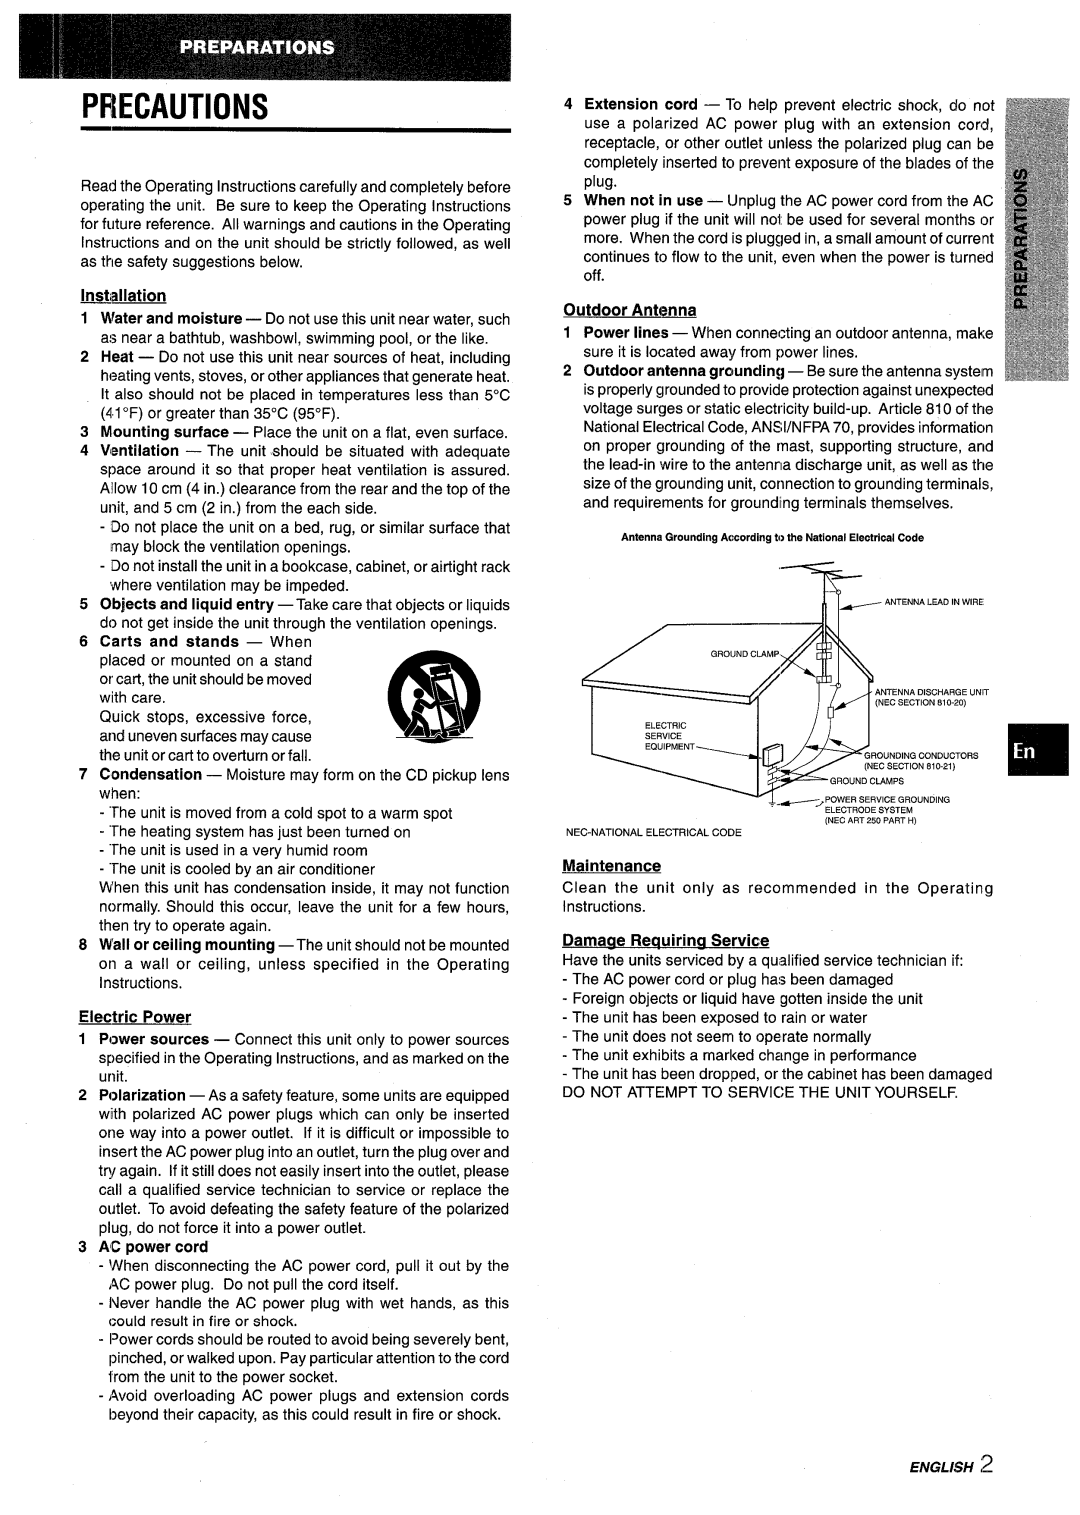 Aiwa NSX-V9000 manual Precautions, Instillation, Outdoor Antem, Electric Power, AC power cord, Maintenance 